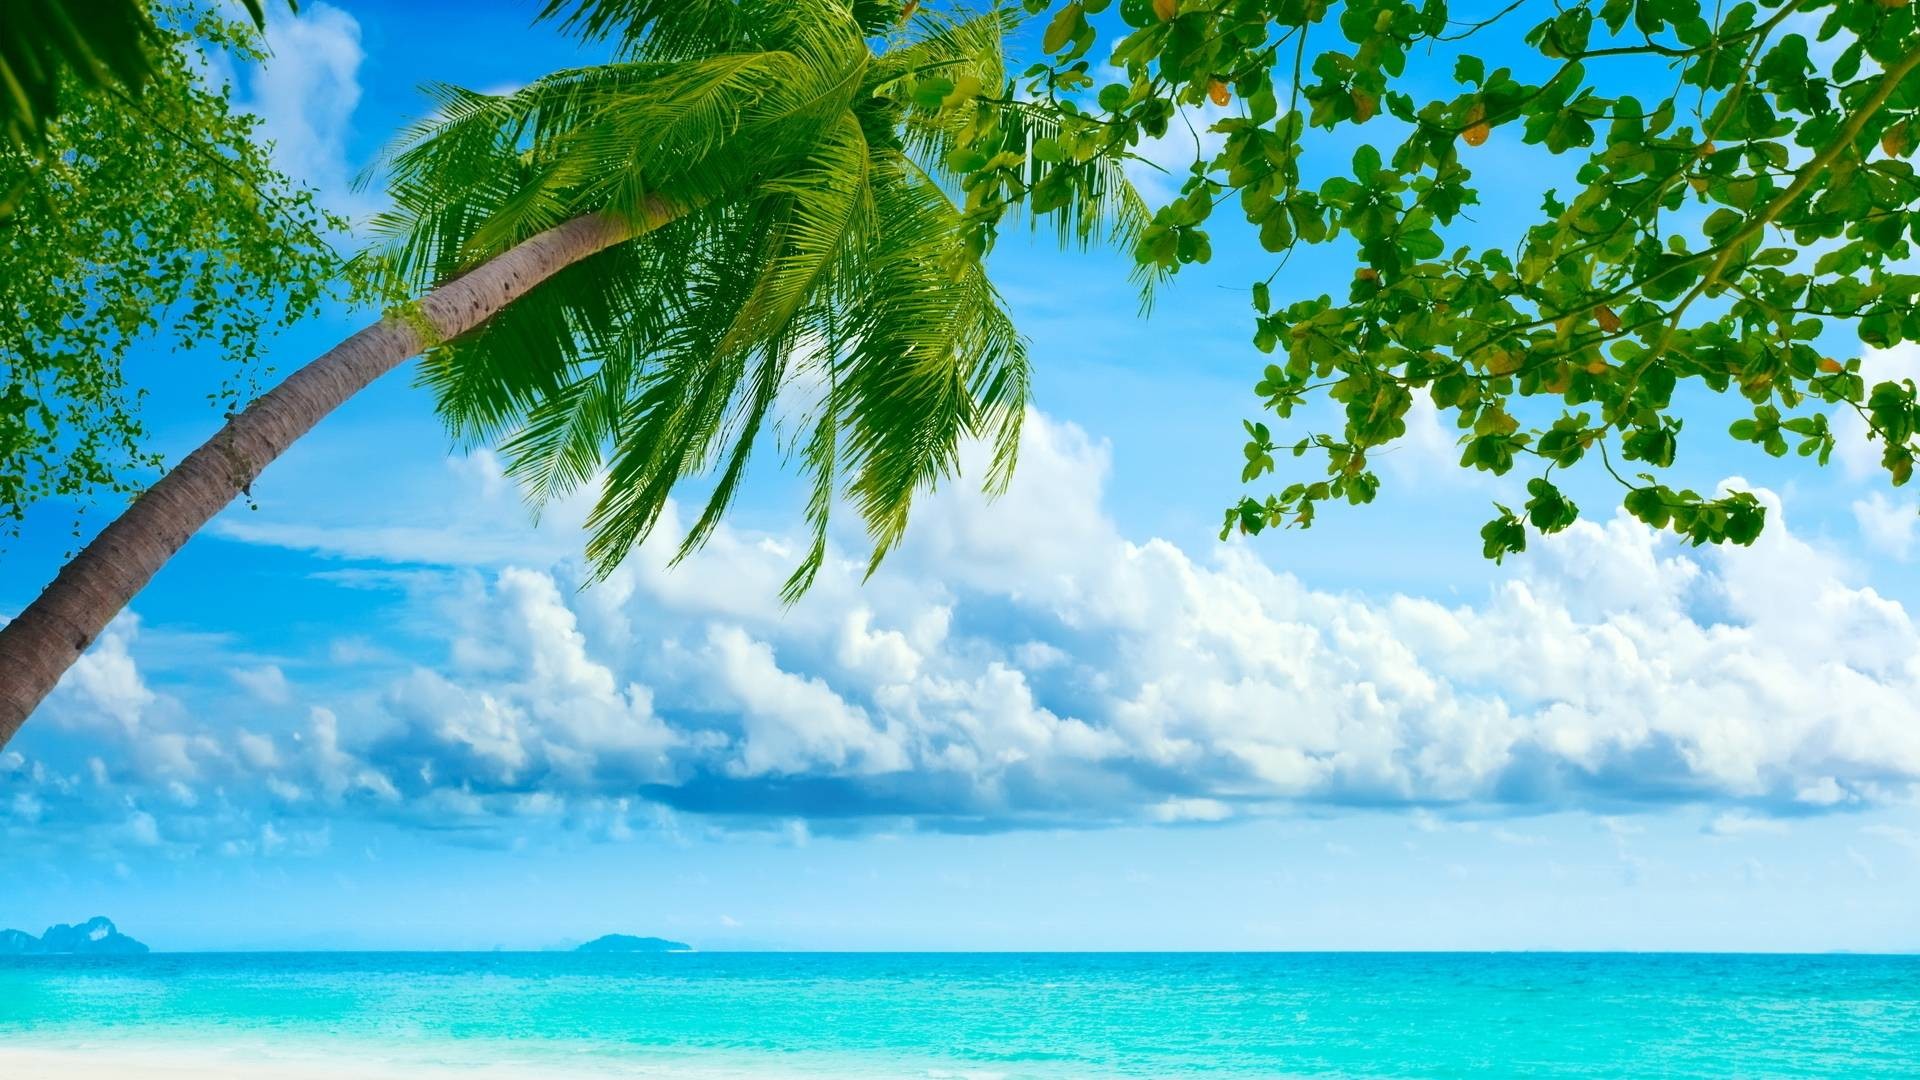 Cute Summer  Beaches  Nature Background Wallpapers on Desktop Nexus  Image 2456602